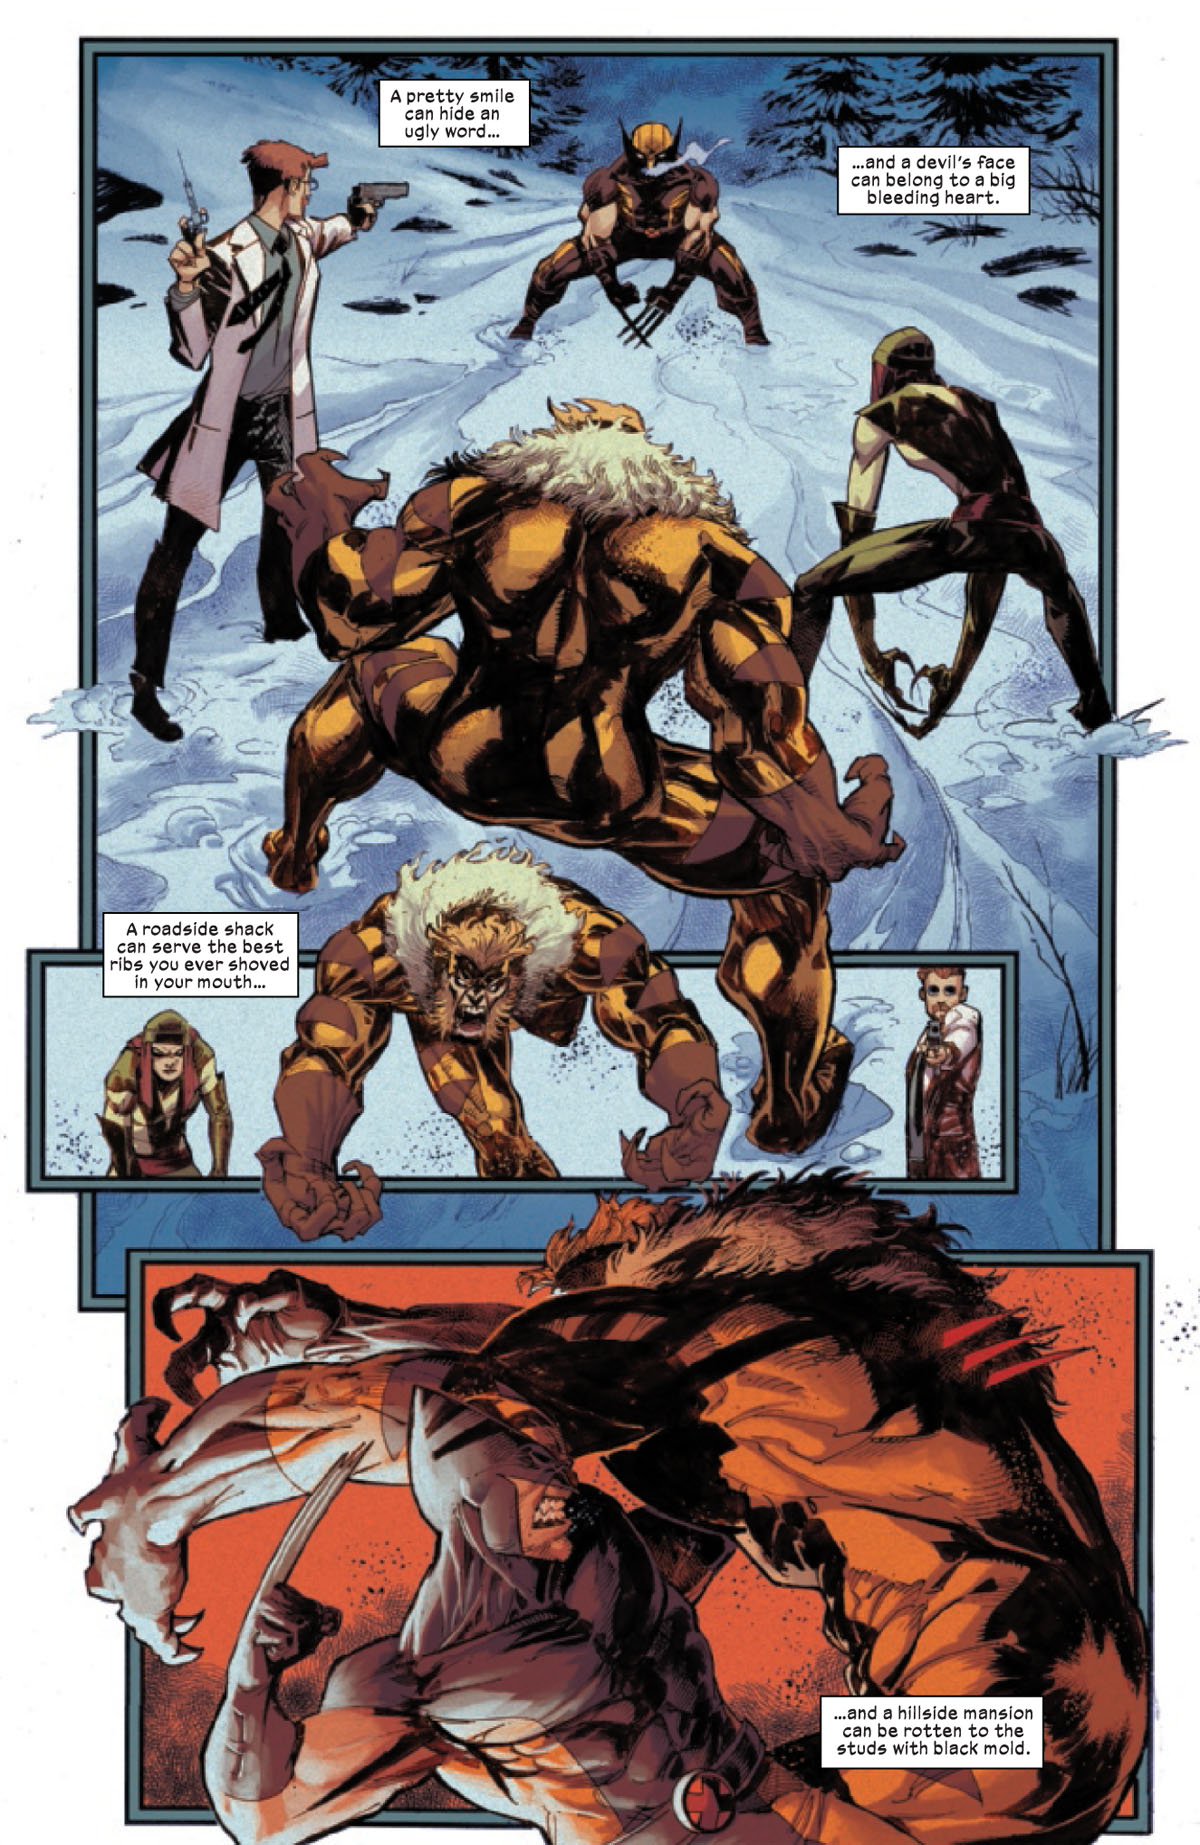 Wolverine #2 page 1